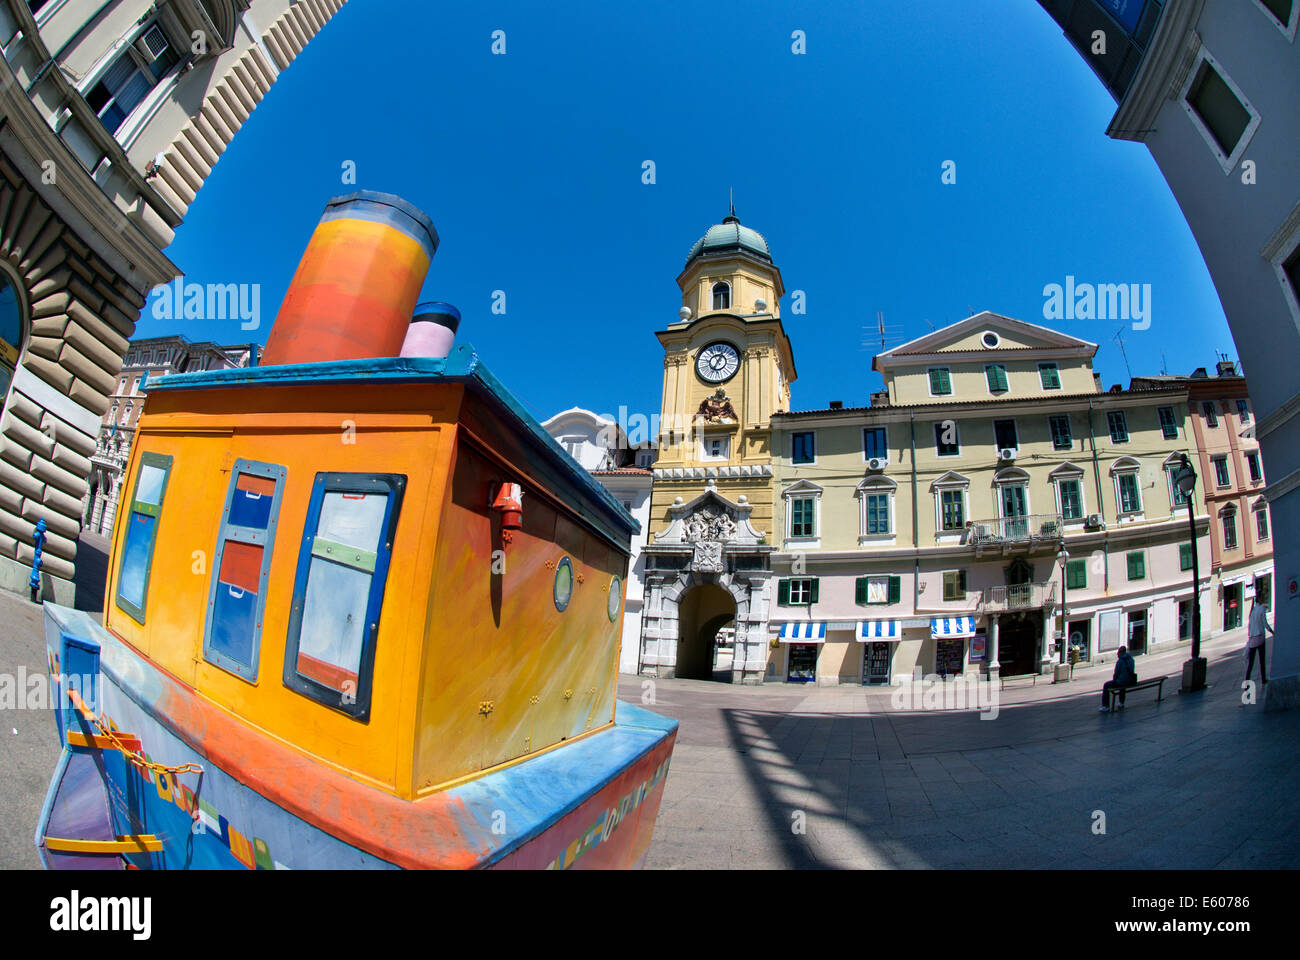 Historic City Tower - Clock in Rijeka down town Stock Photo